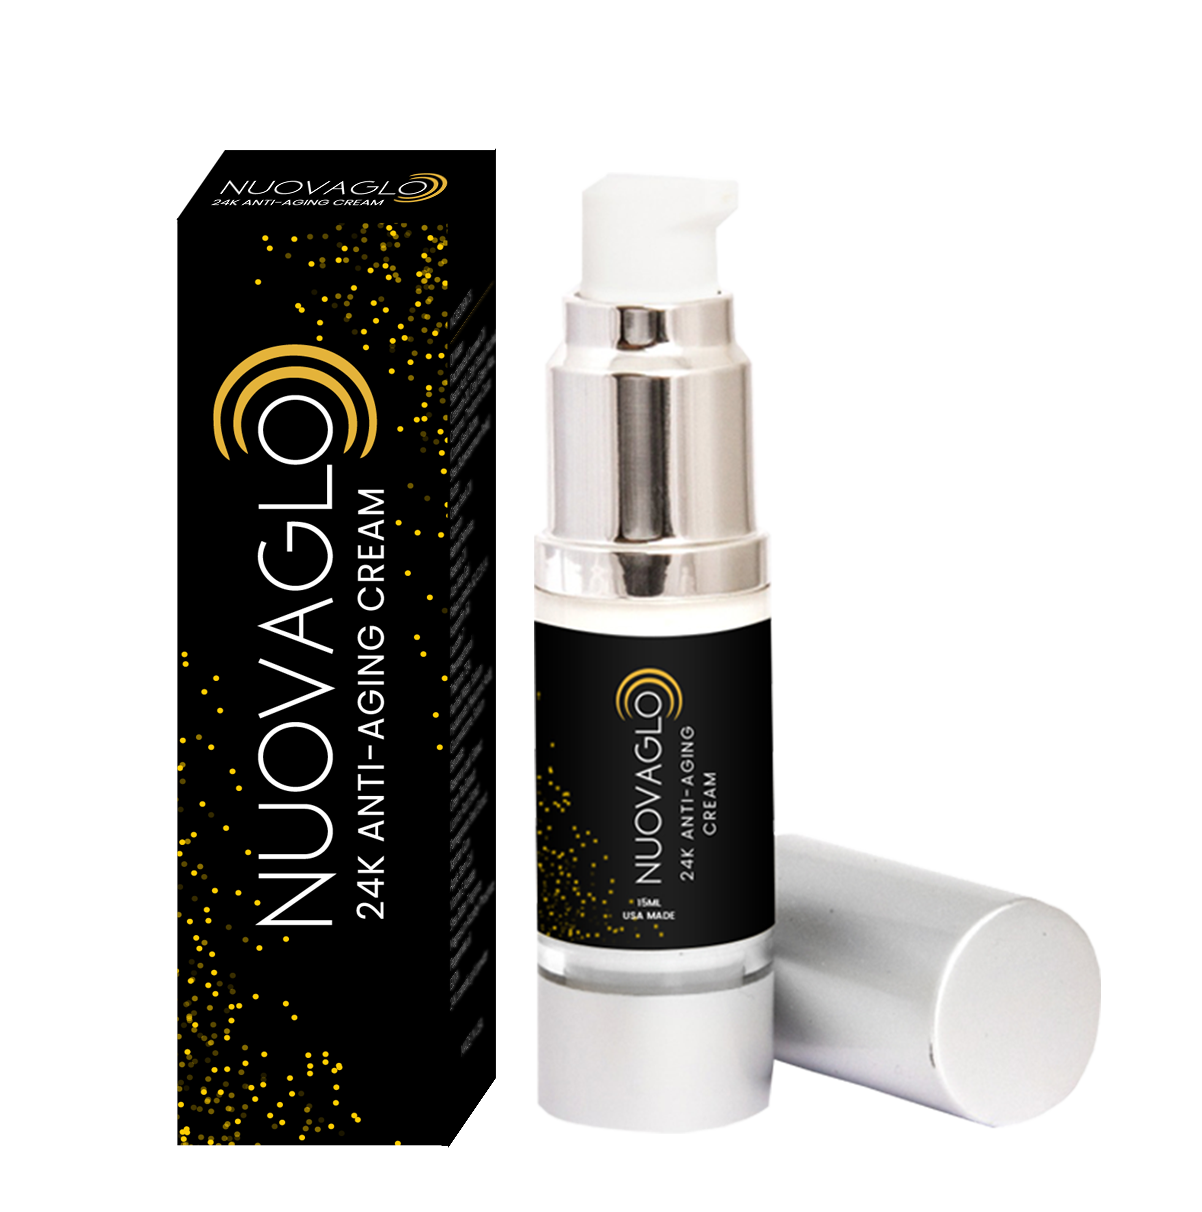 NUOVAGLO™ 24K Anti Aging Retinol Cream